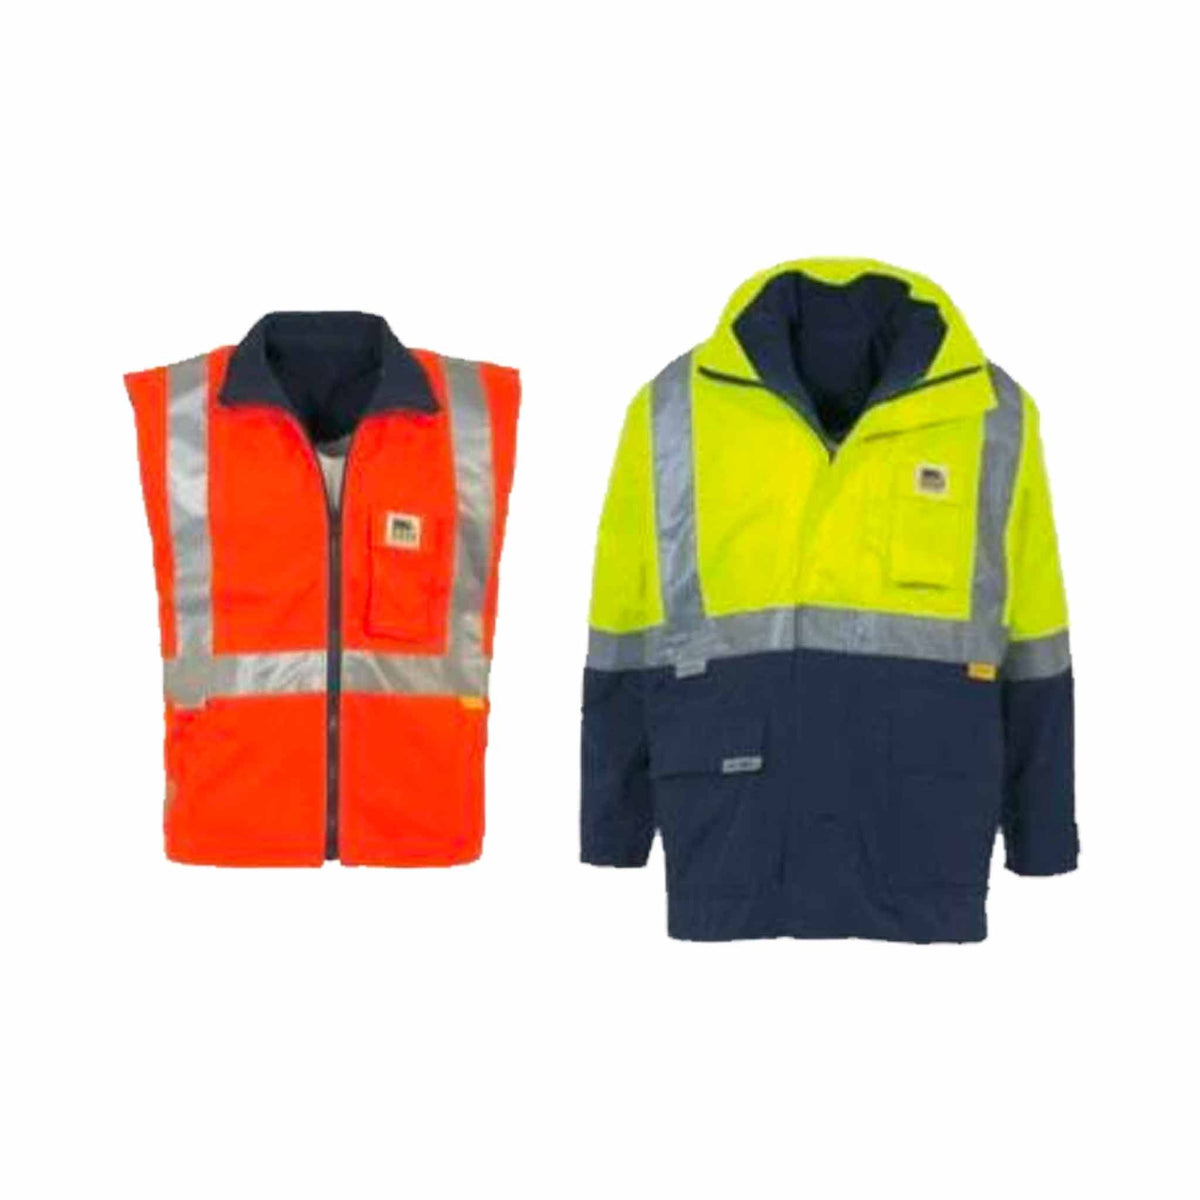 yellow/navy orange/navy jacket vest combination